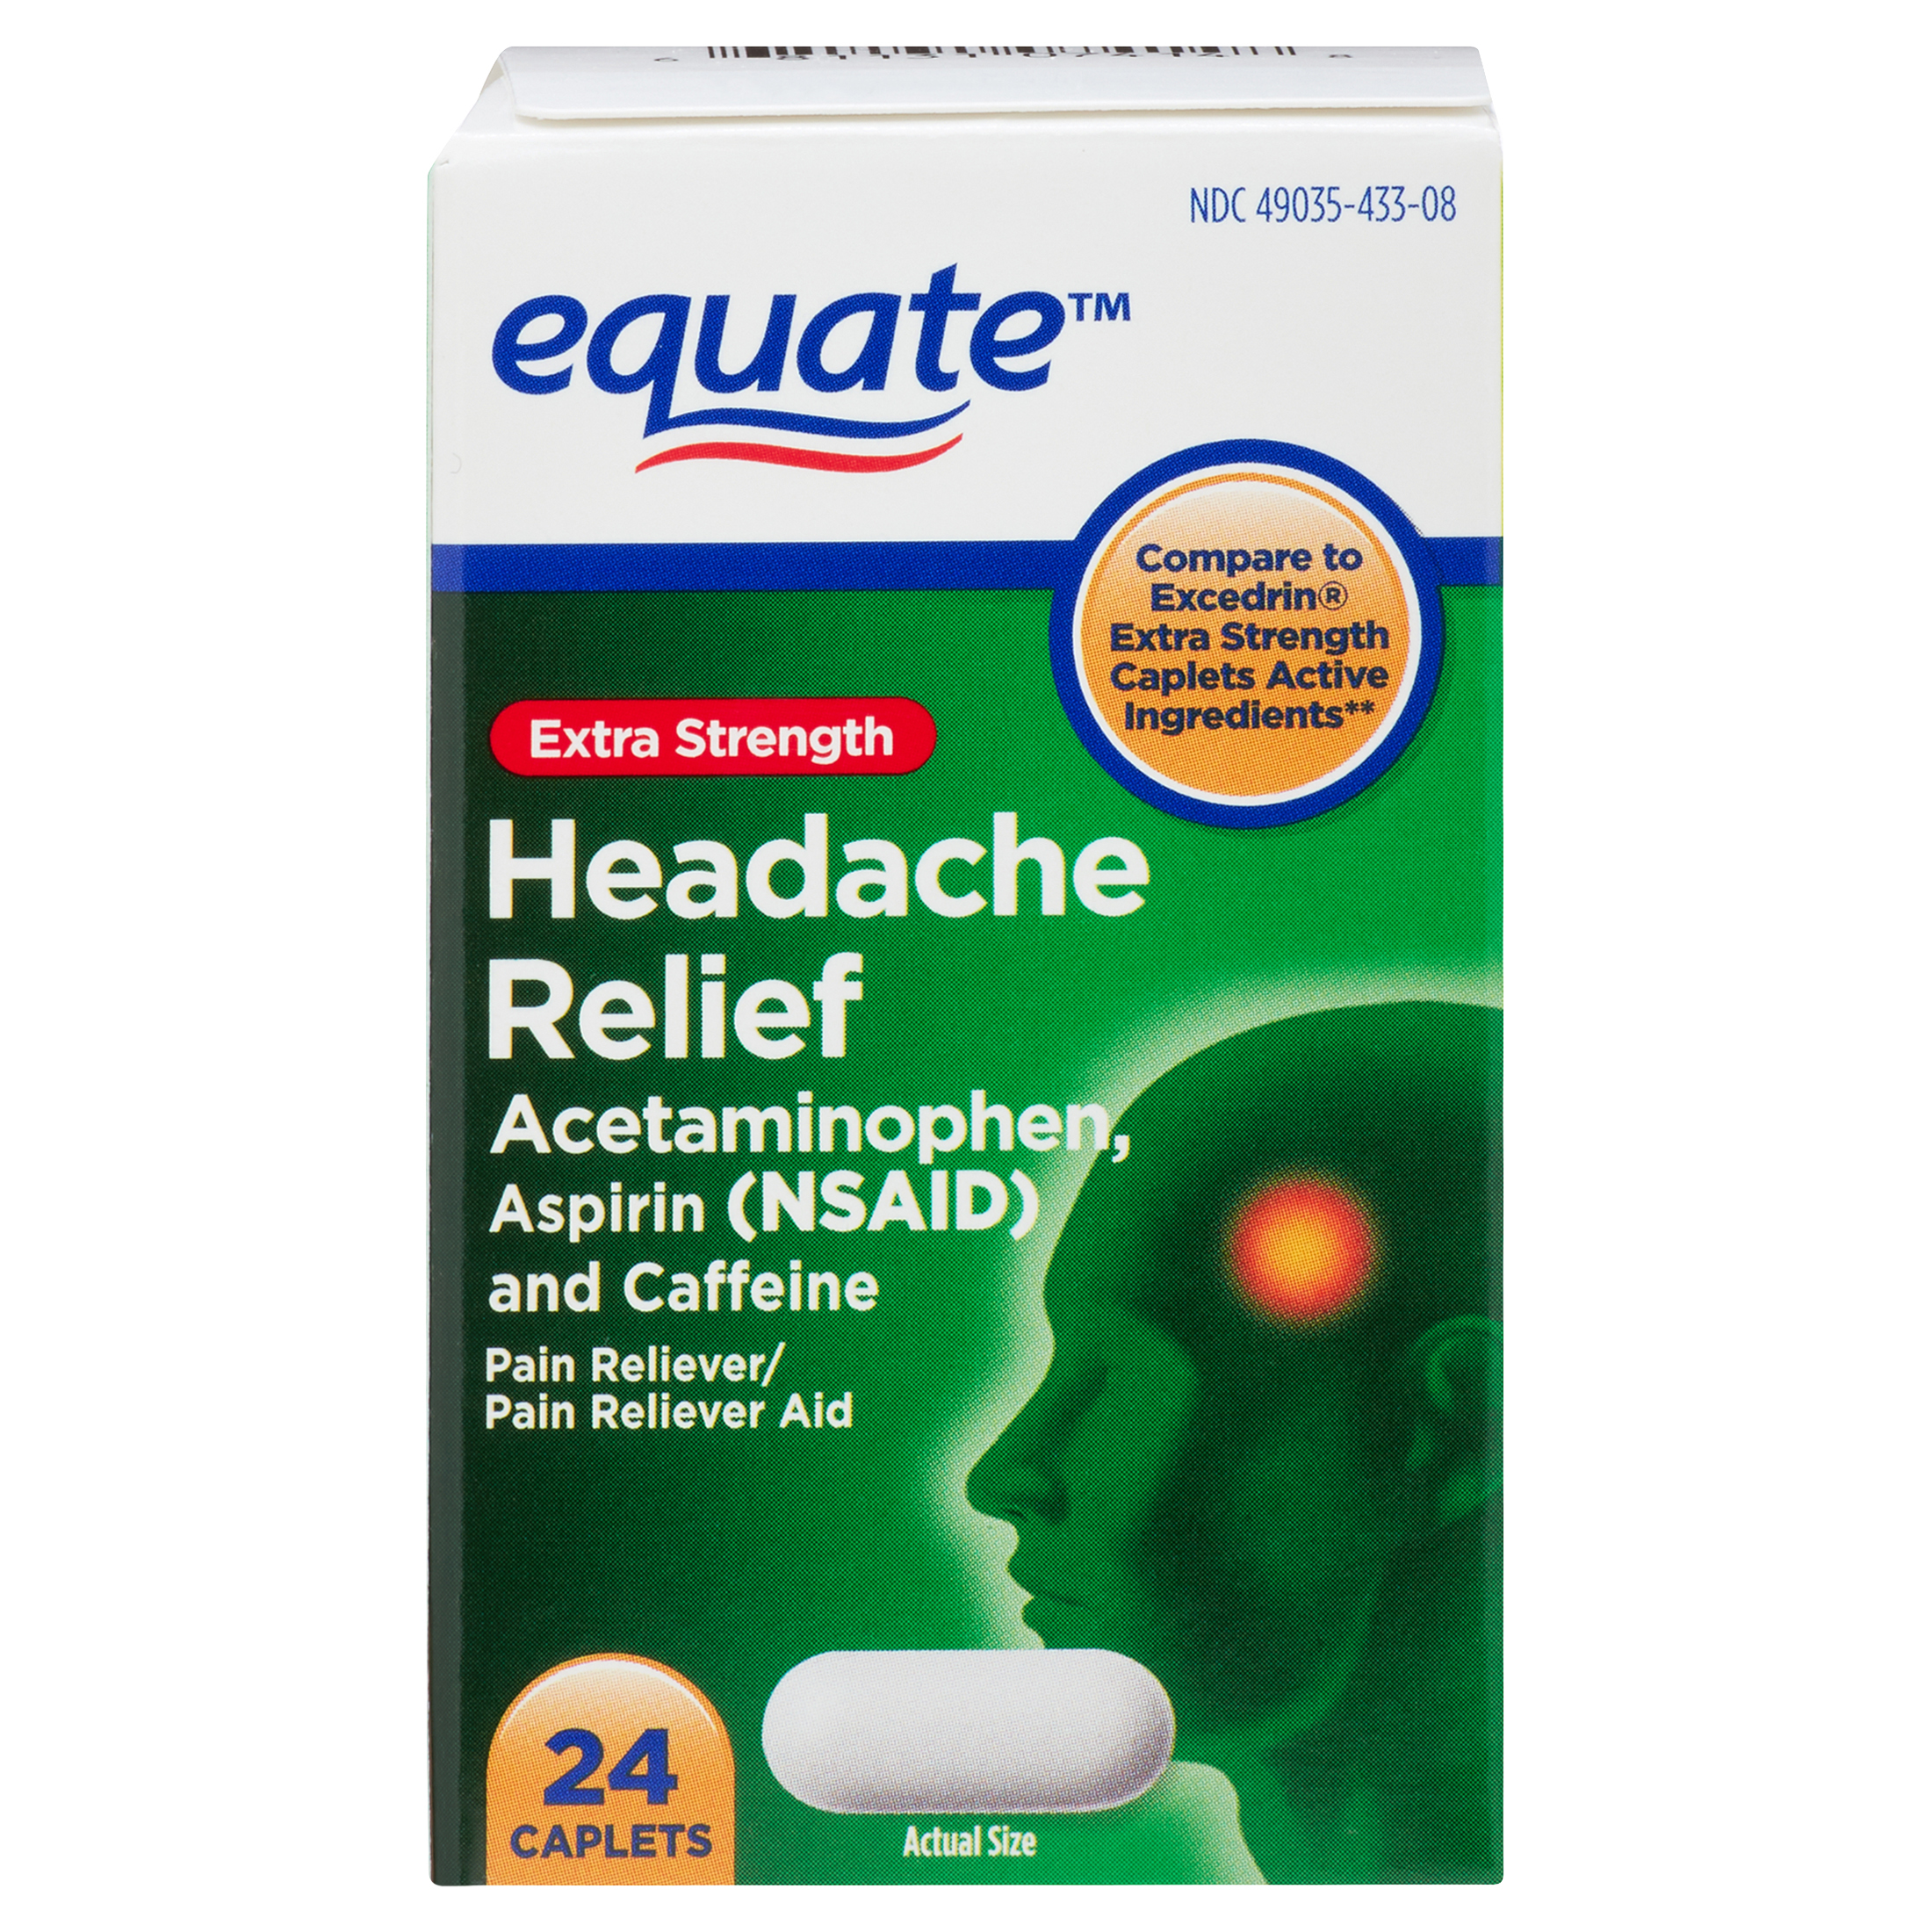 Equate Extra Strength Headache Relief Caplets, 24 Count - image 1 of 7